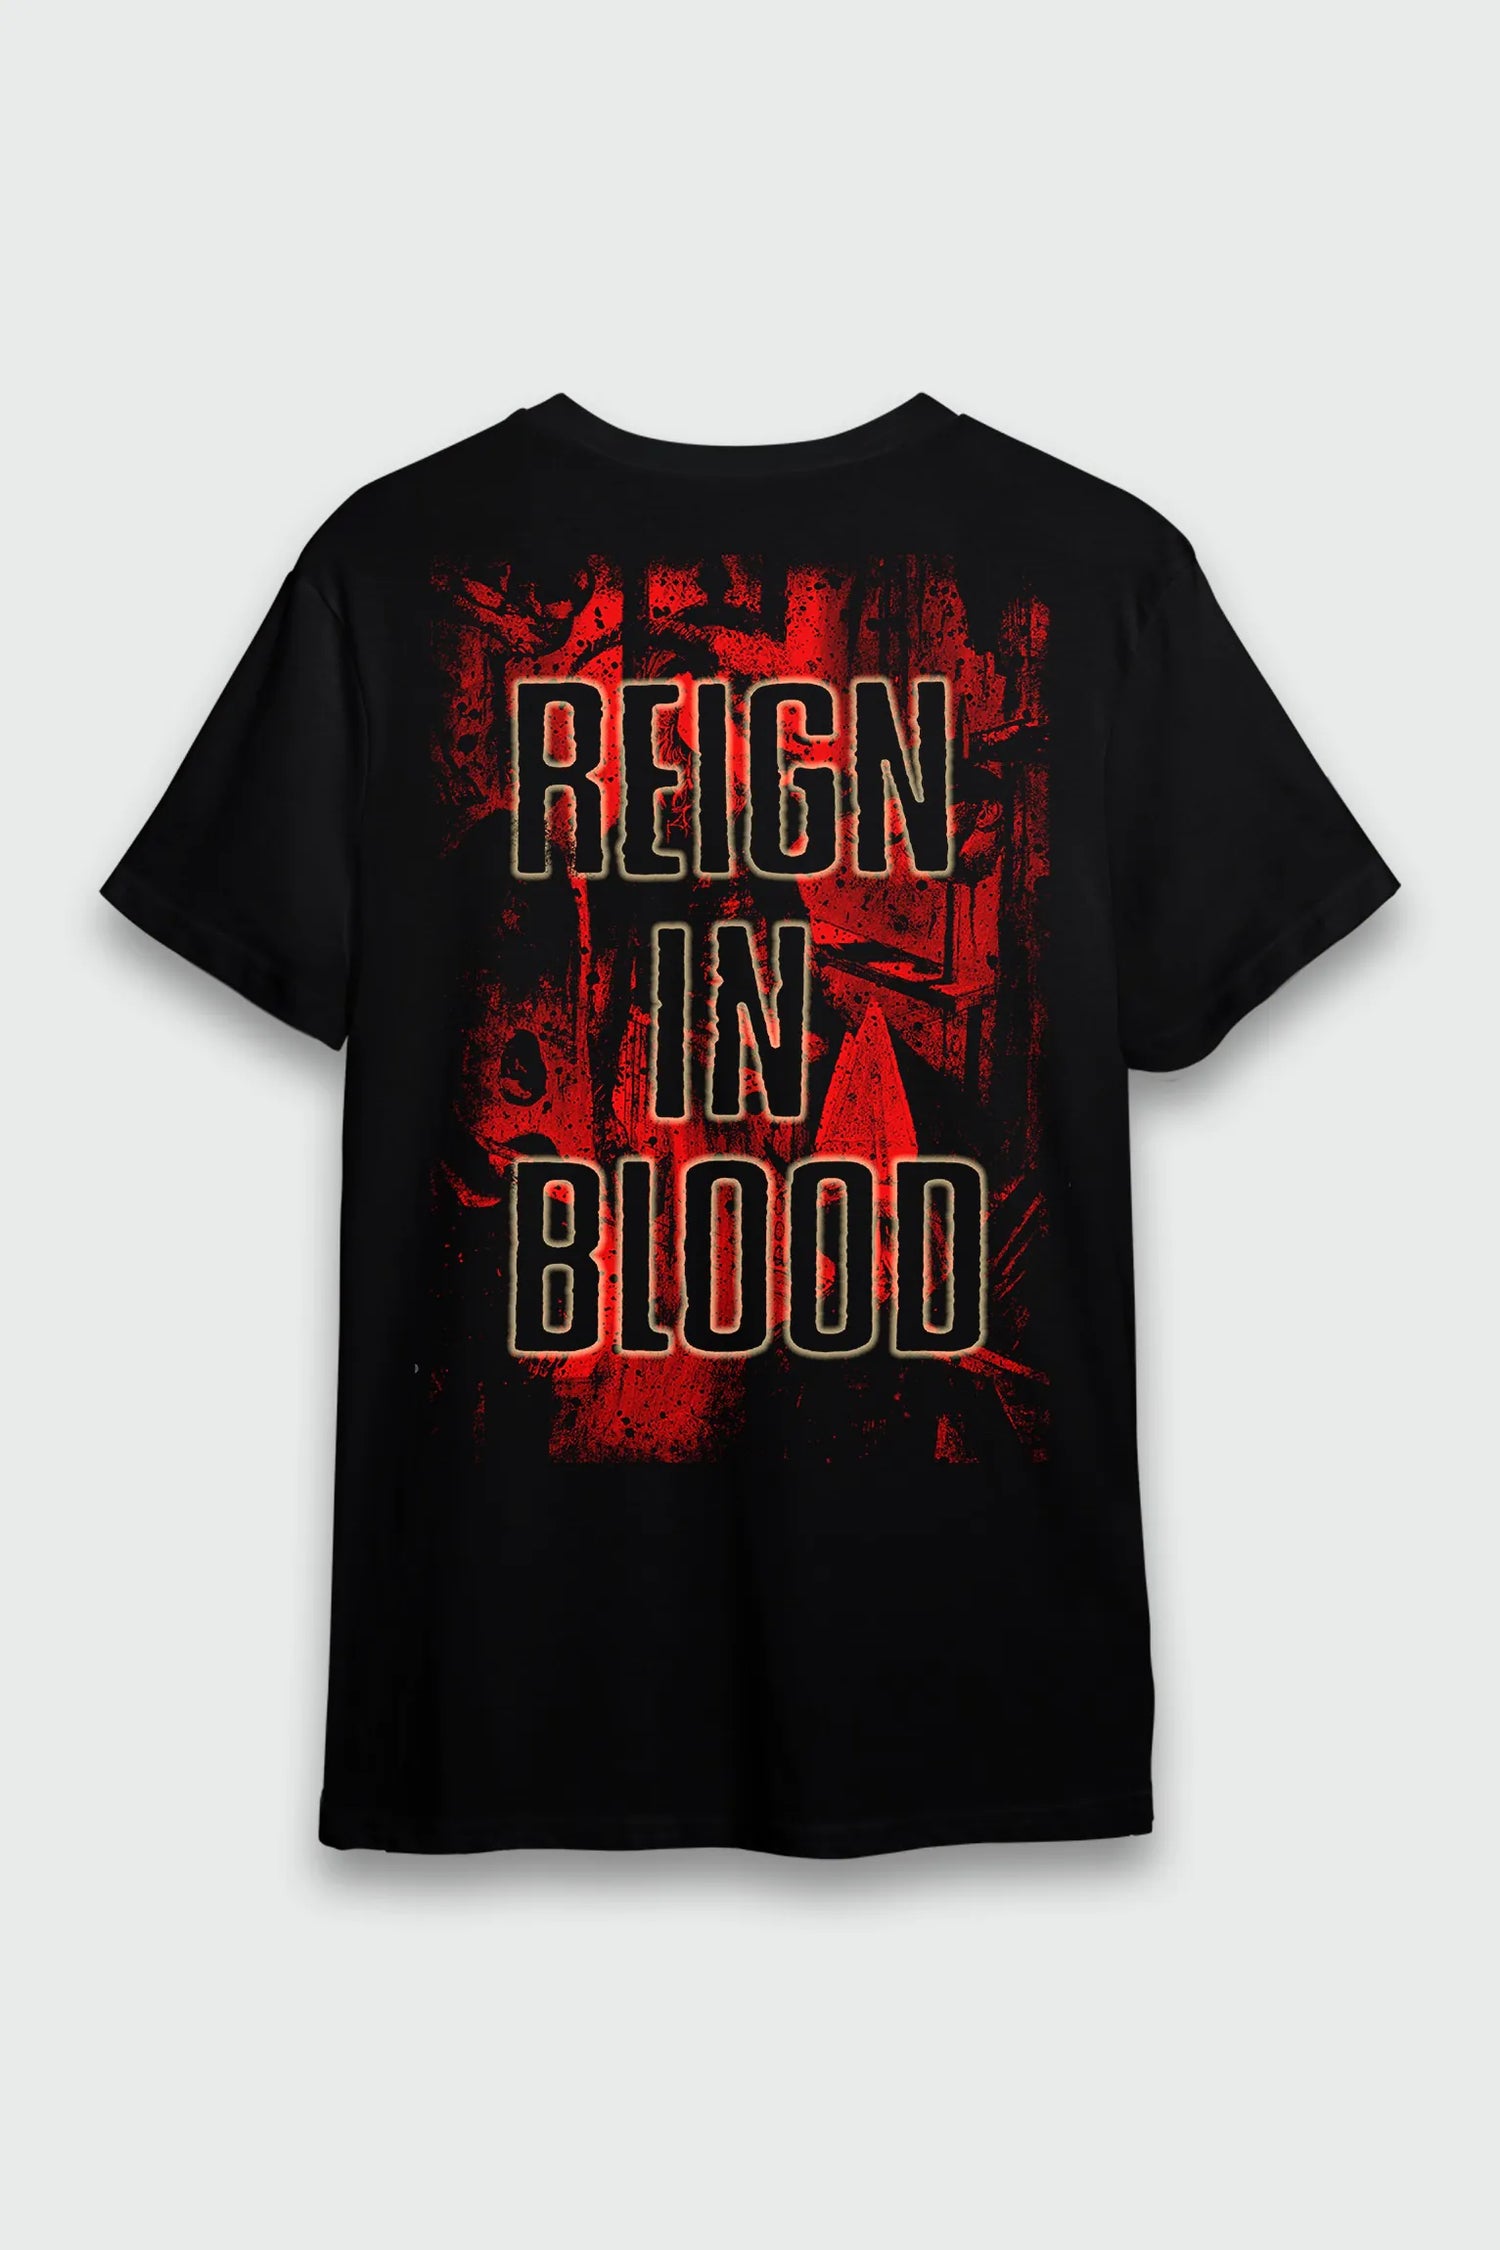 Camiseta Slayer Reign in Blood